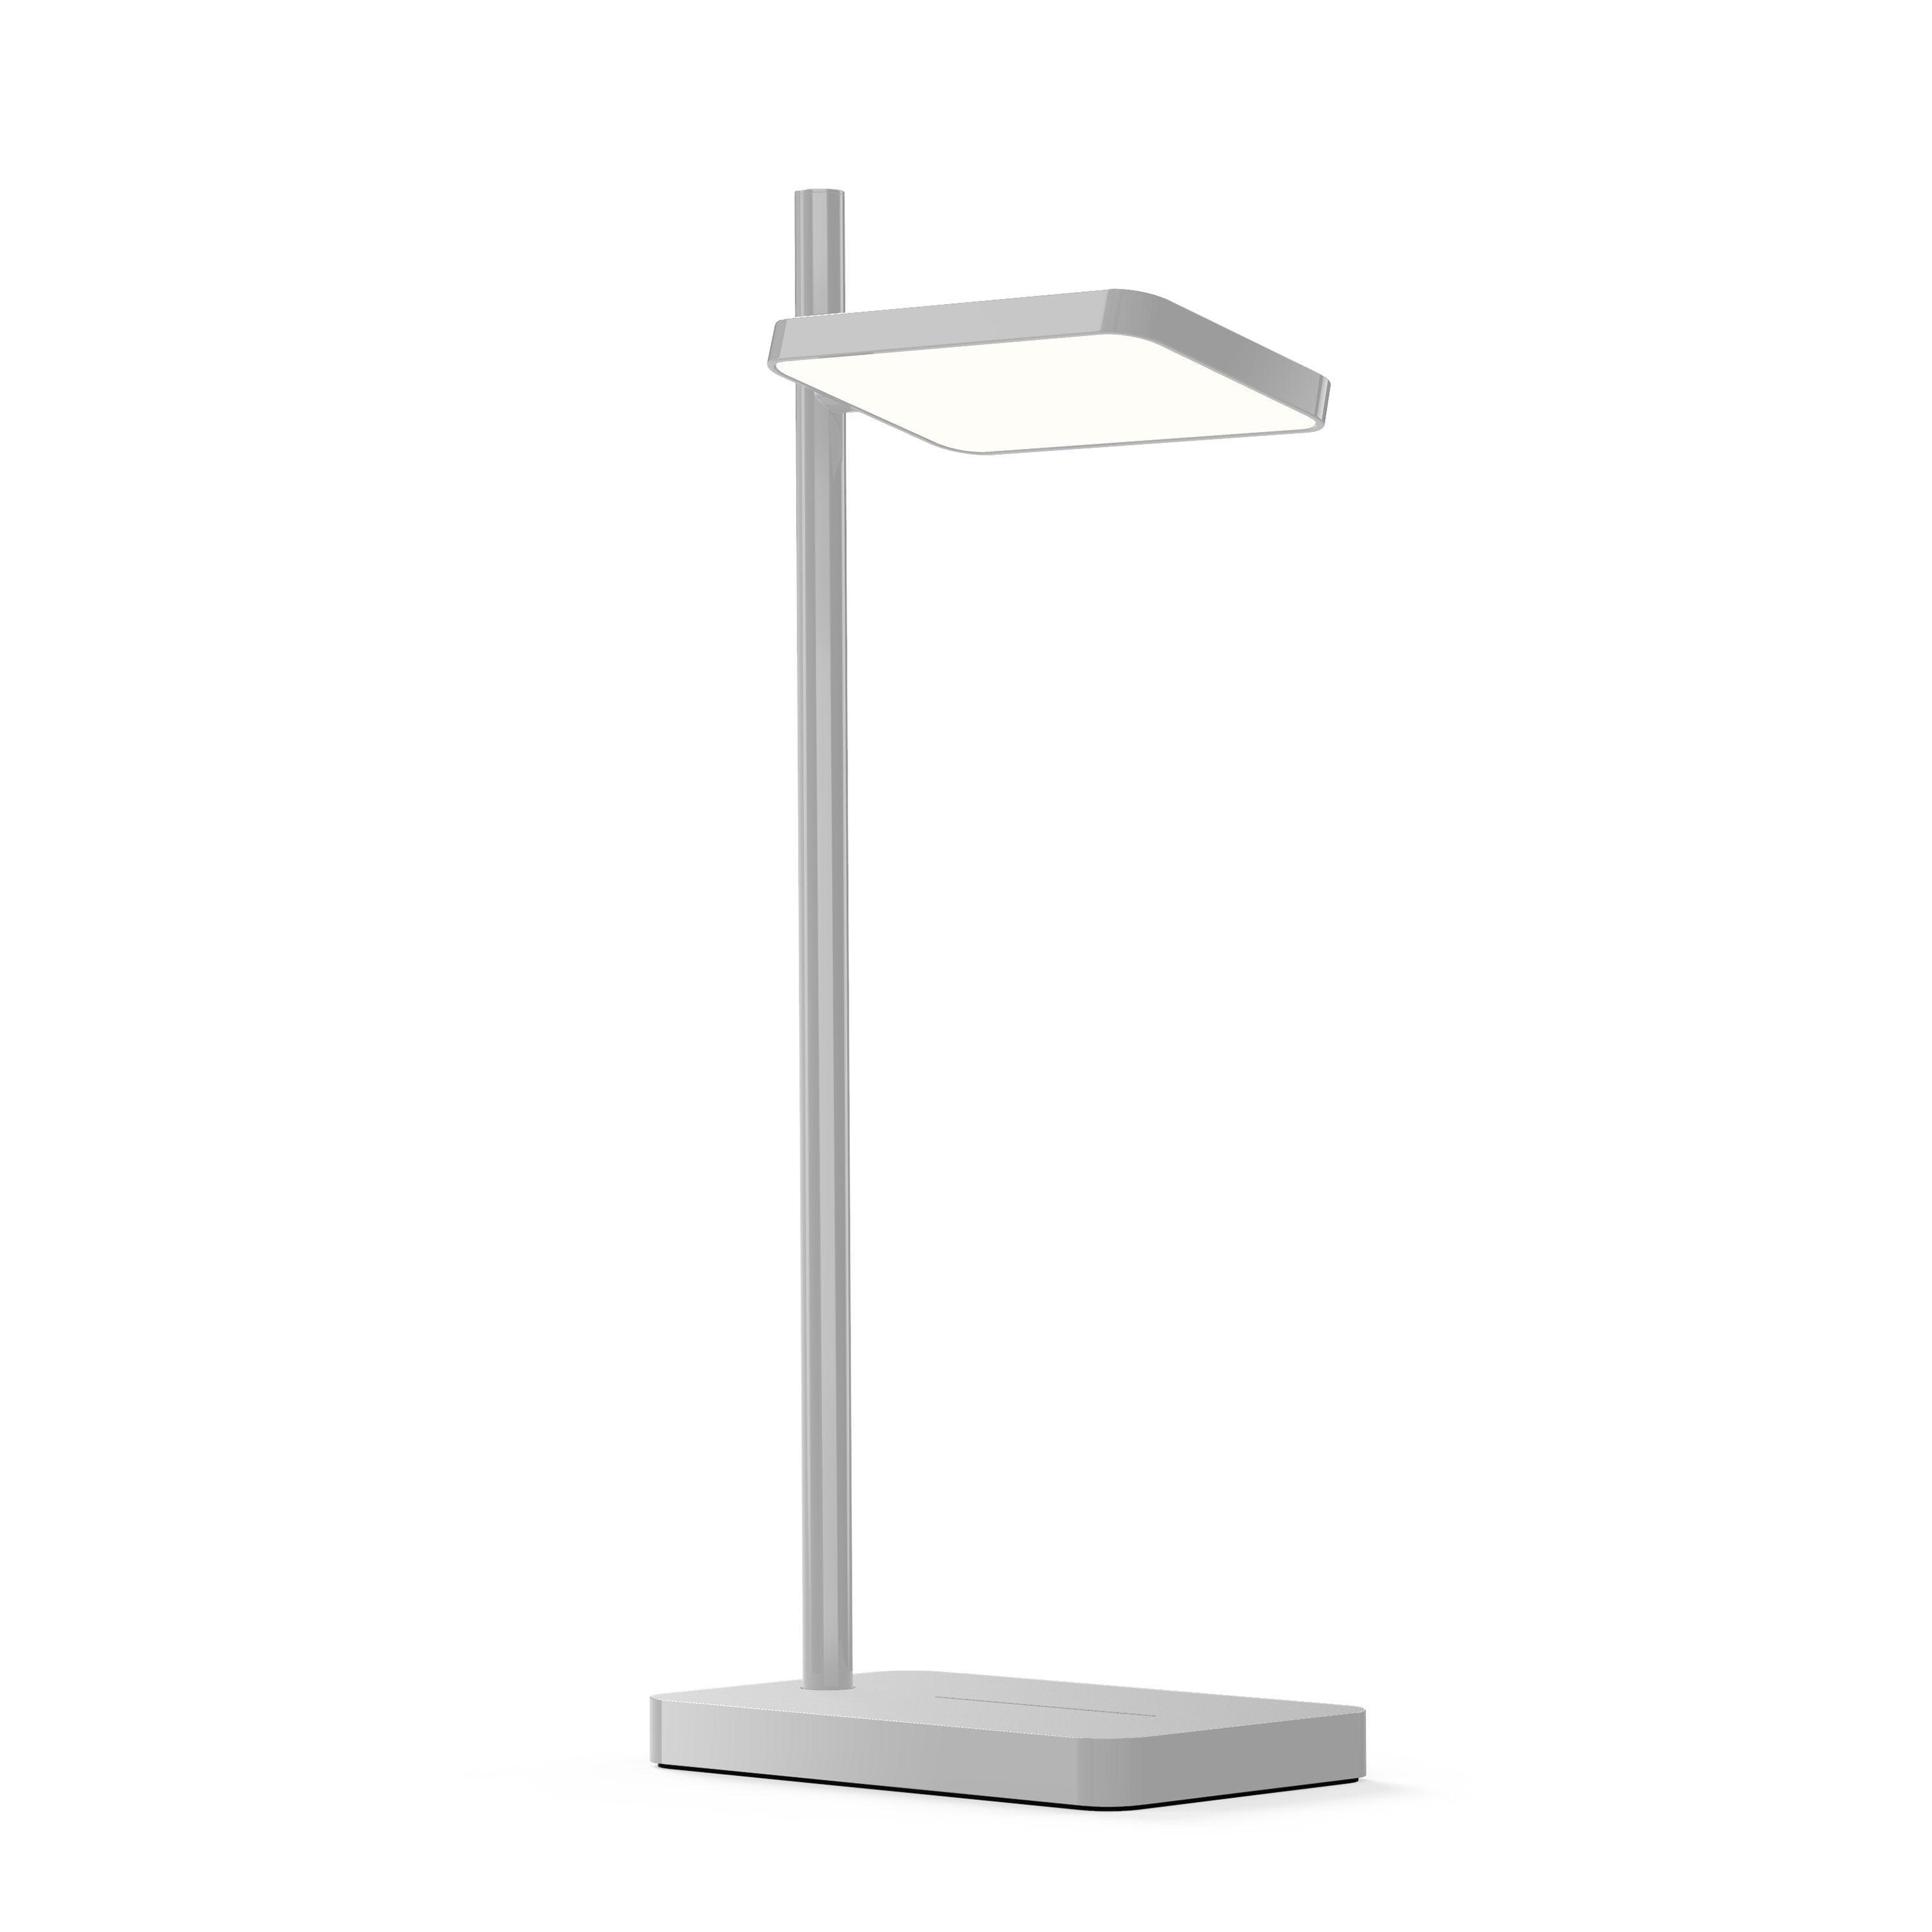 Pablo Designs - Talia Table Lamp - TALI TBL GRY | Montreal Lighting & Hardware